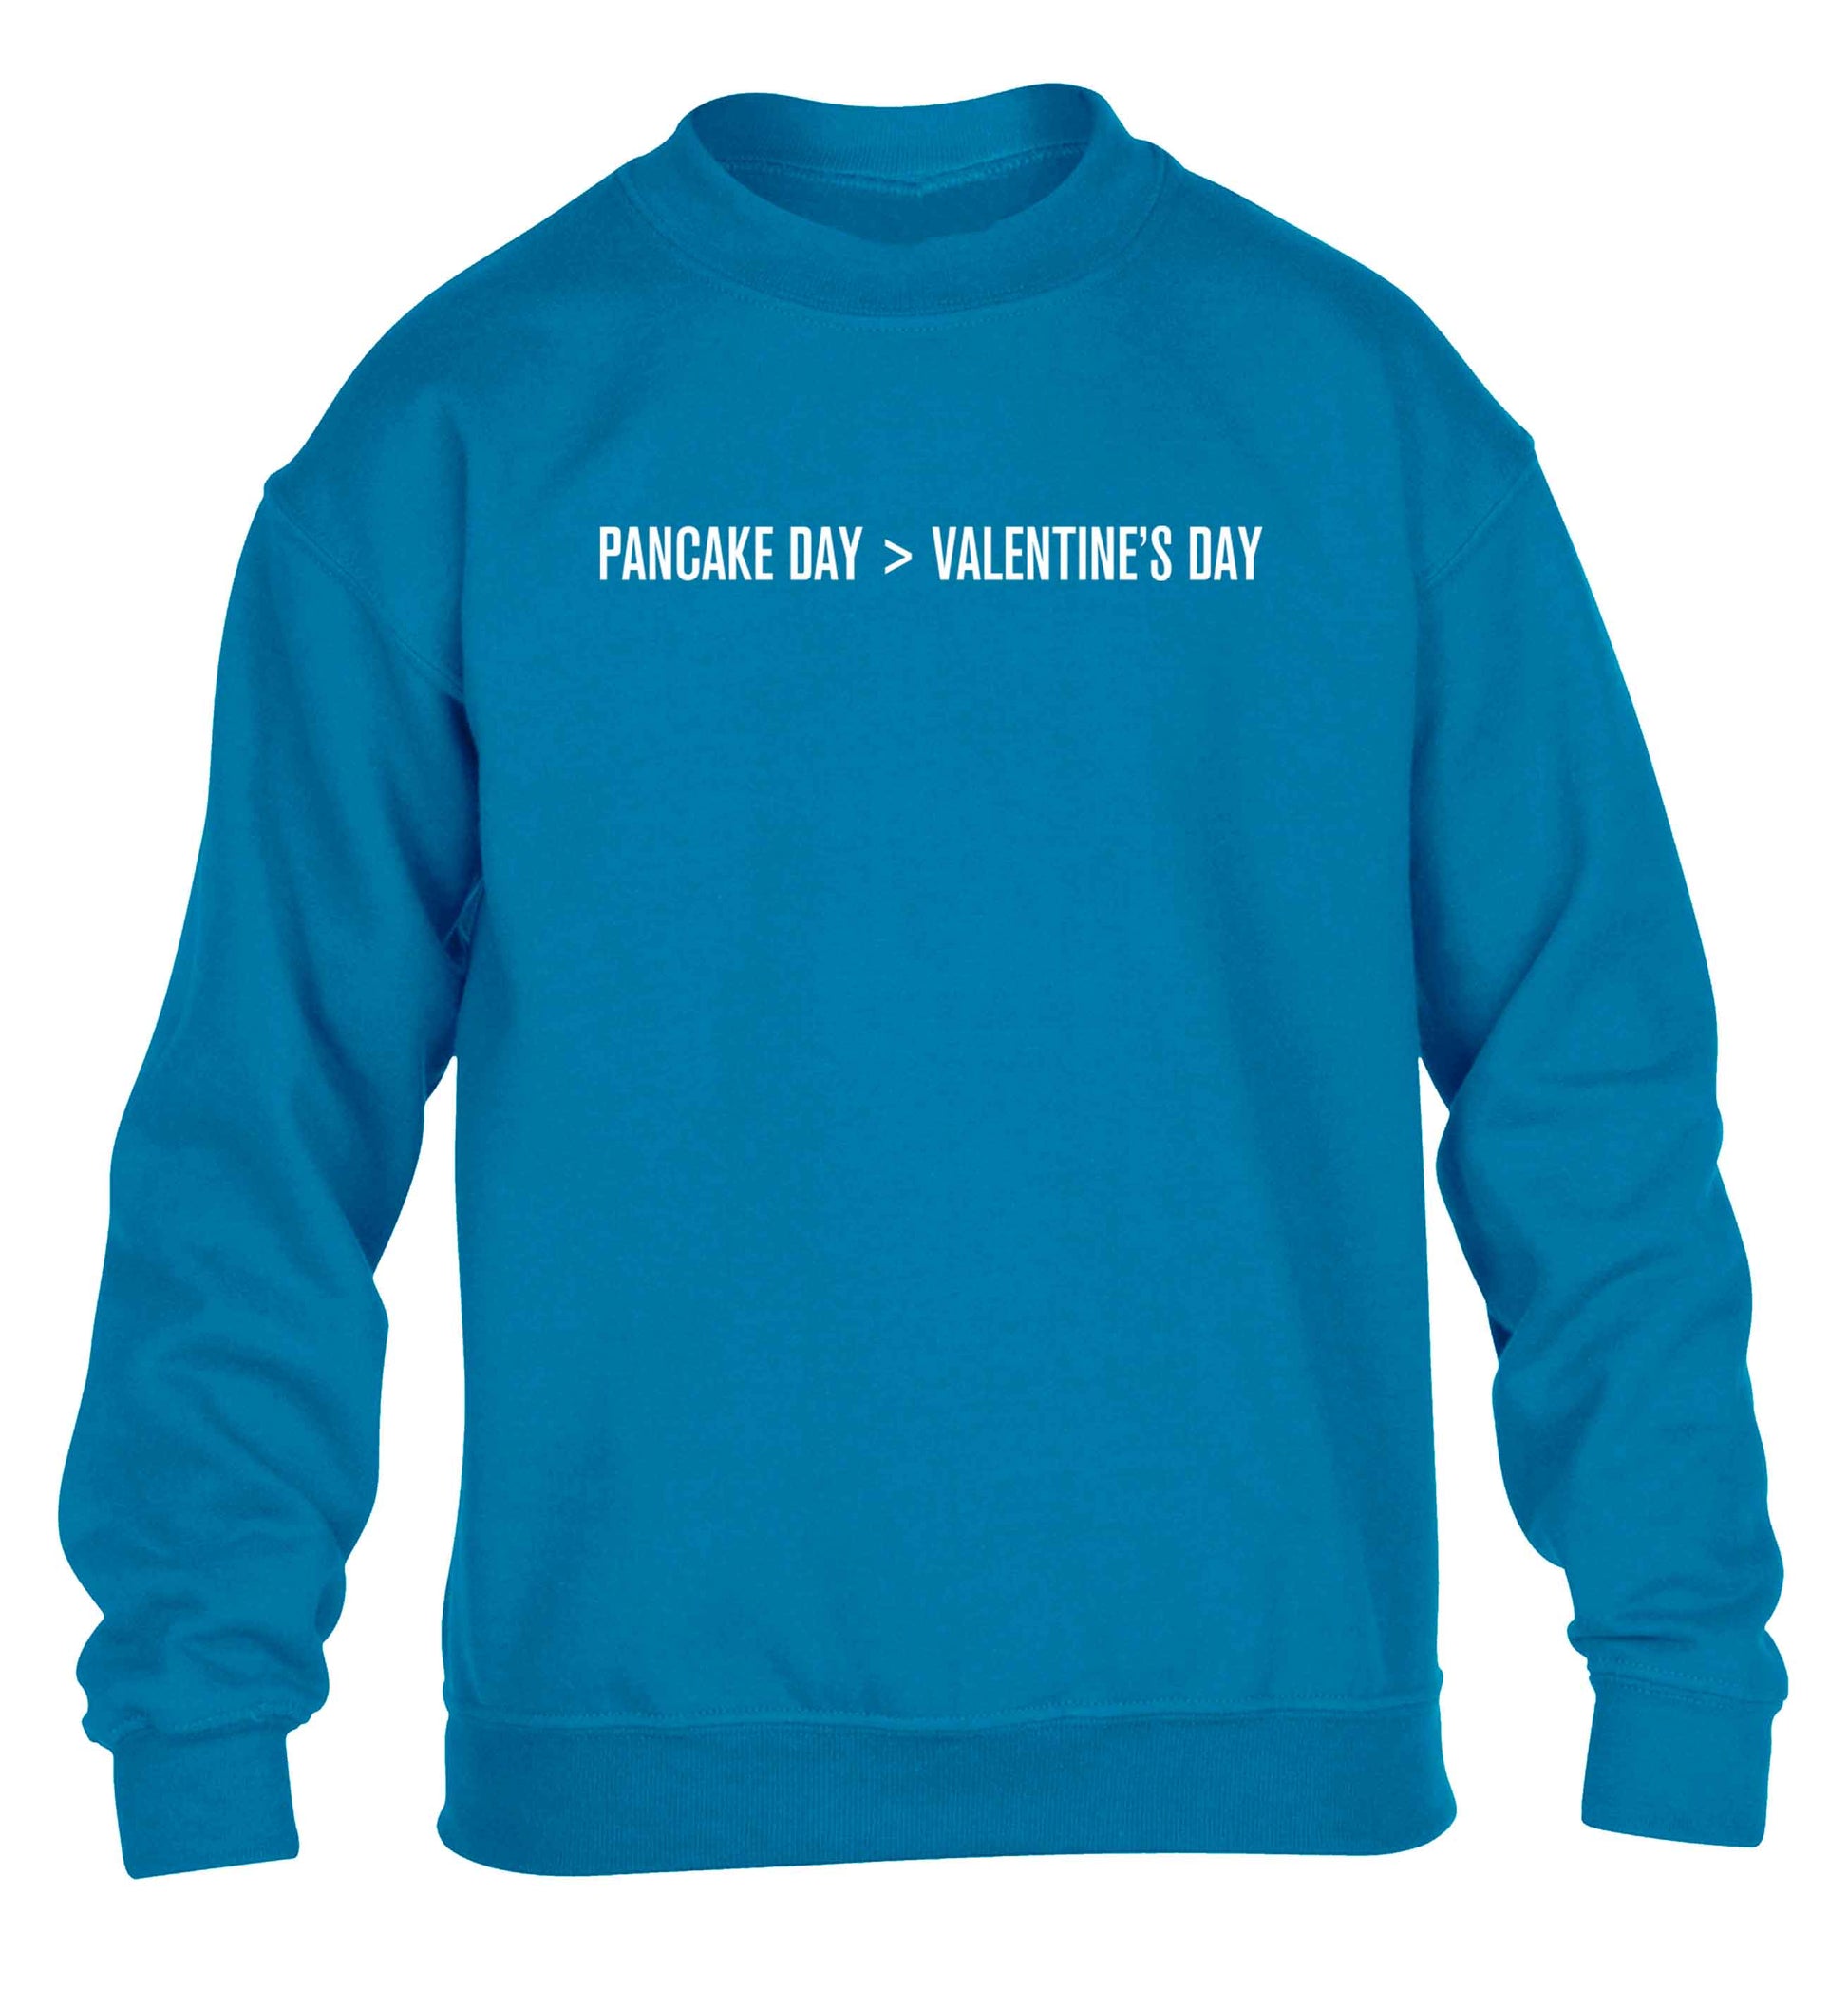 Pancake day > valentines day children's blue sweater 12-13 Years